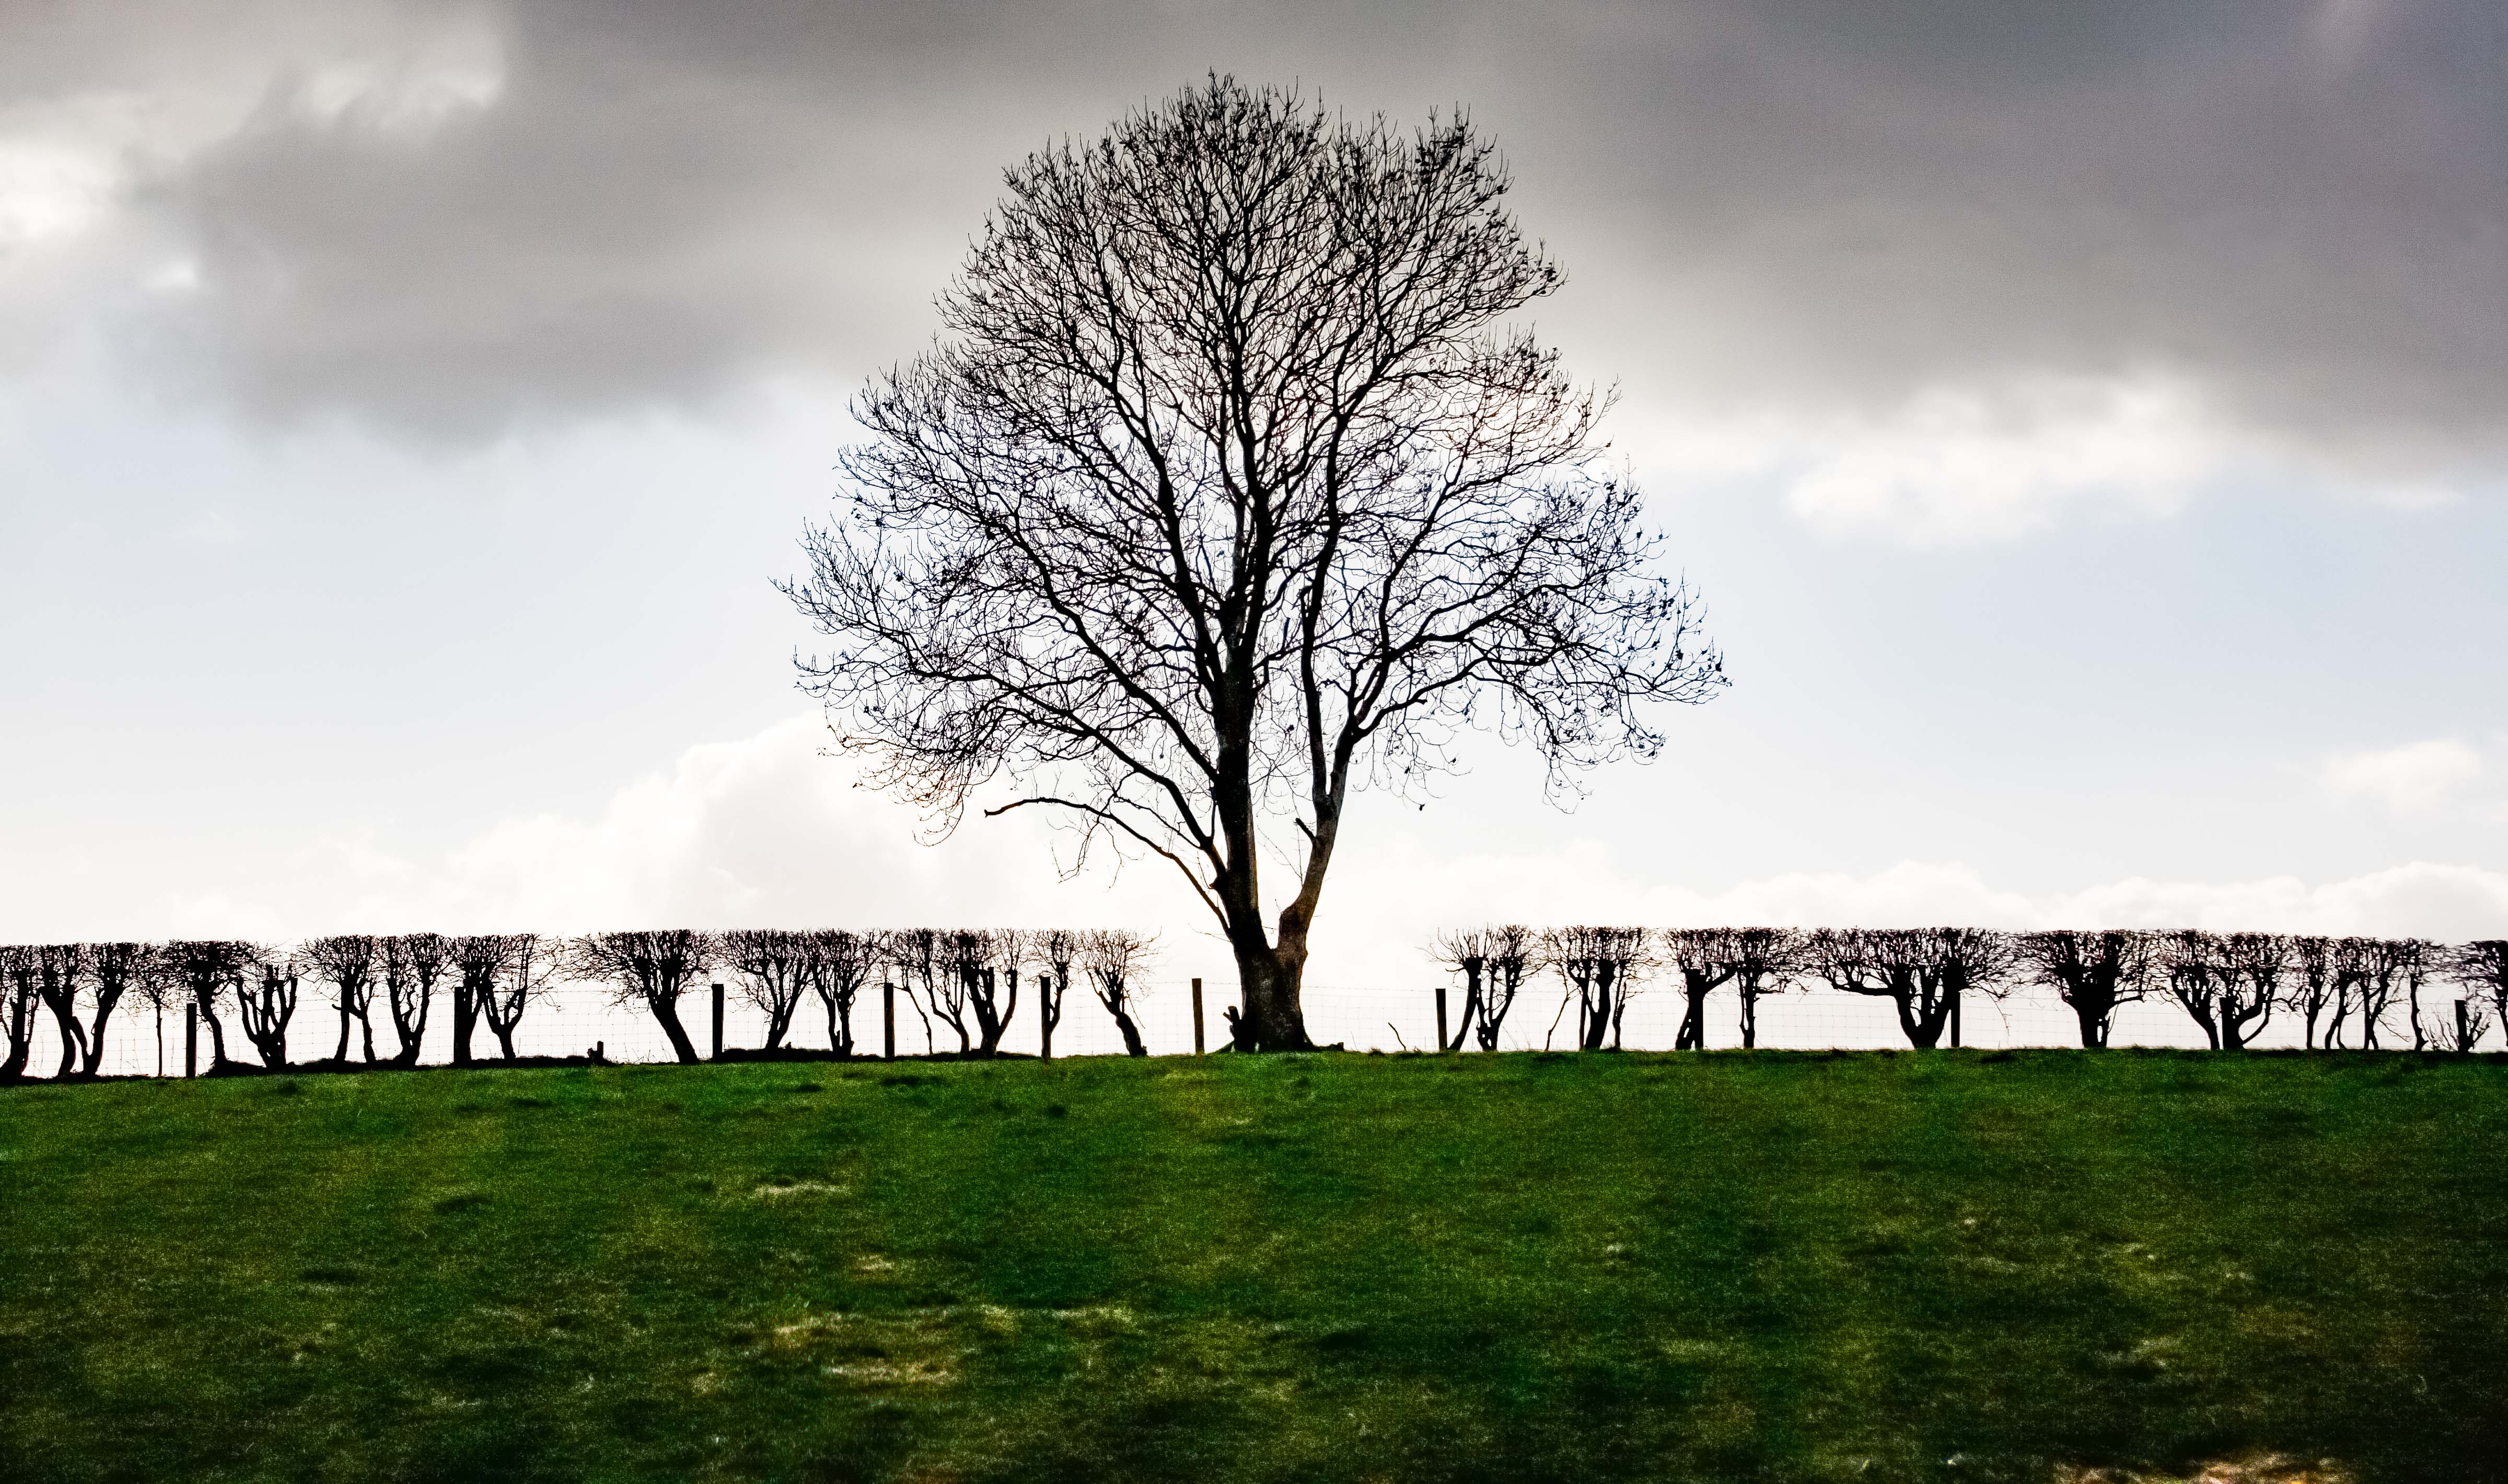 N Ireland, Balleymoney Prov, Tree Landscape, 2009, IMG 0098